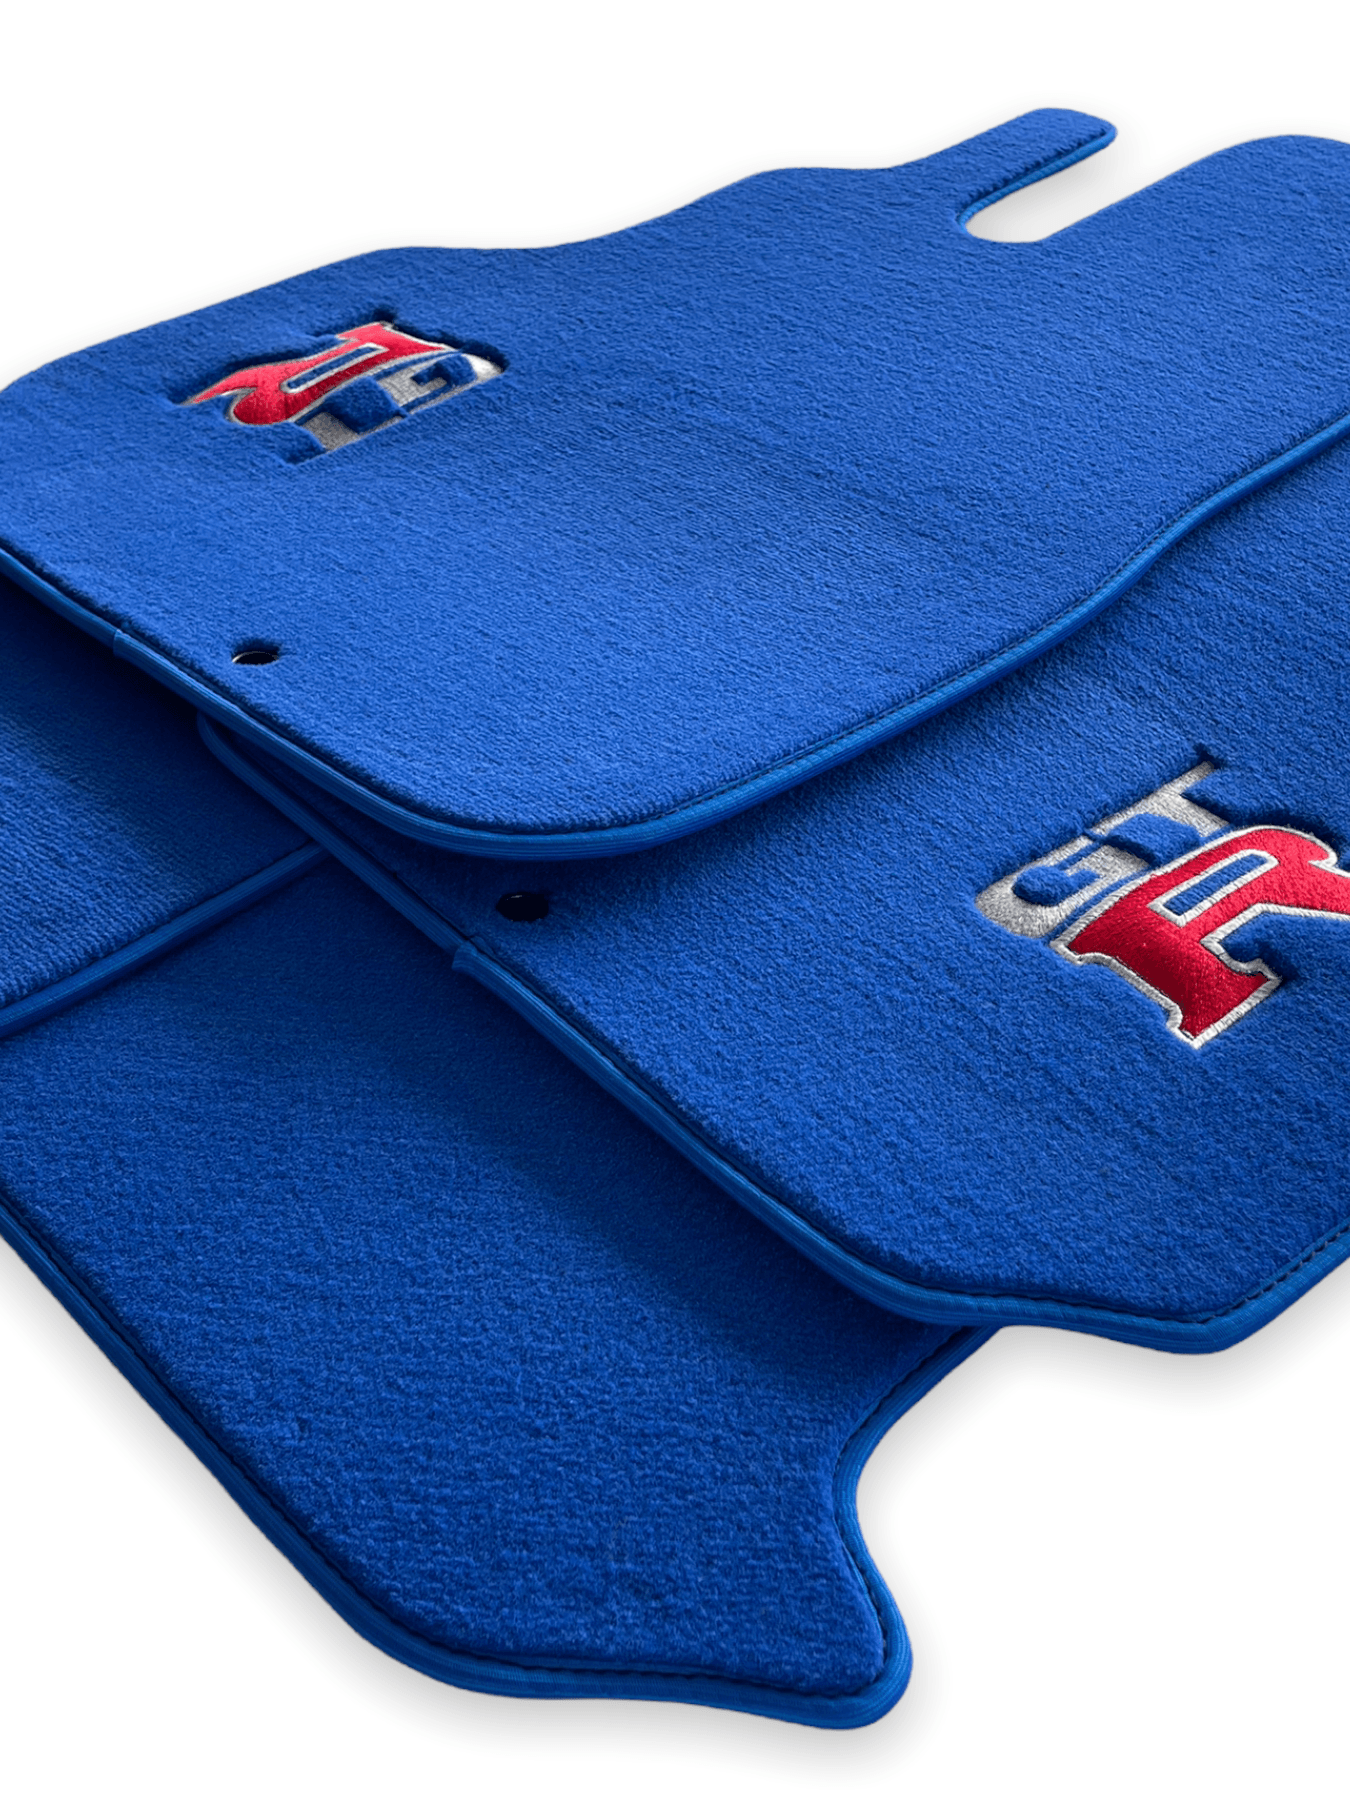 Floor Mats for Nissan GT-R Tailored Blue Carpets Set With GTR Emblem - AutoWin